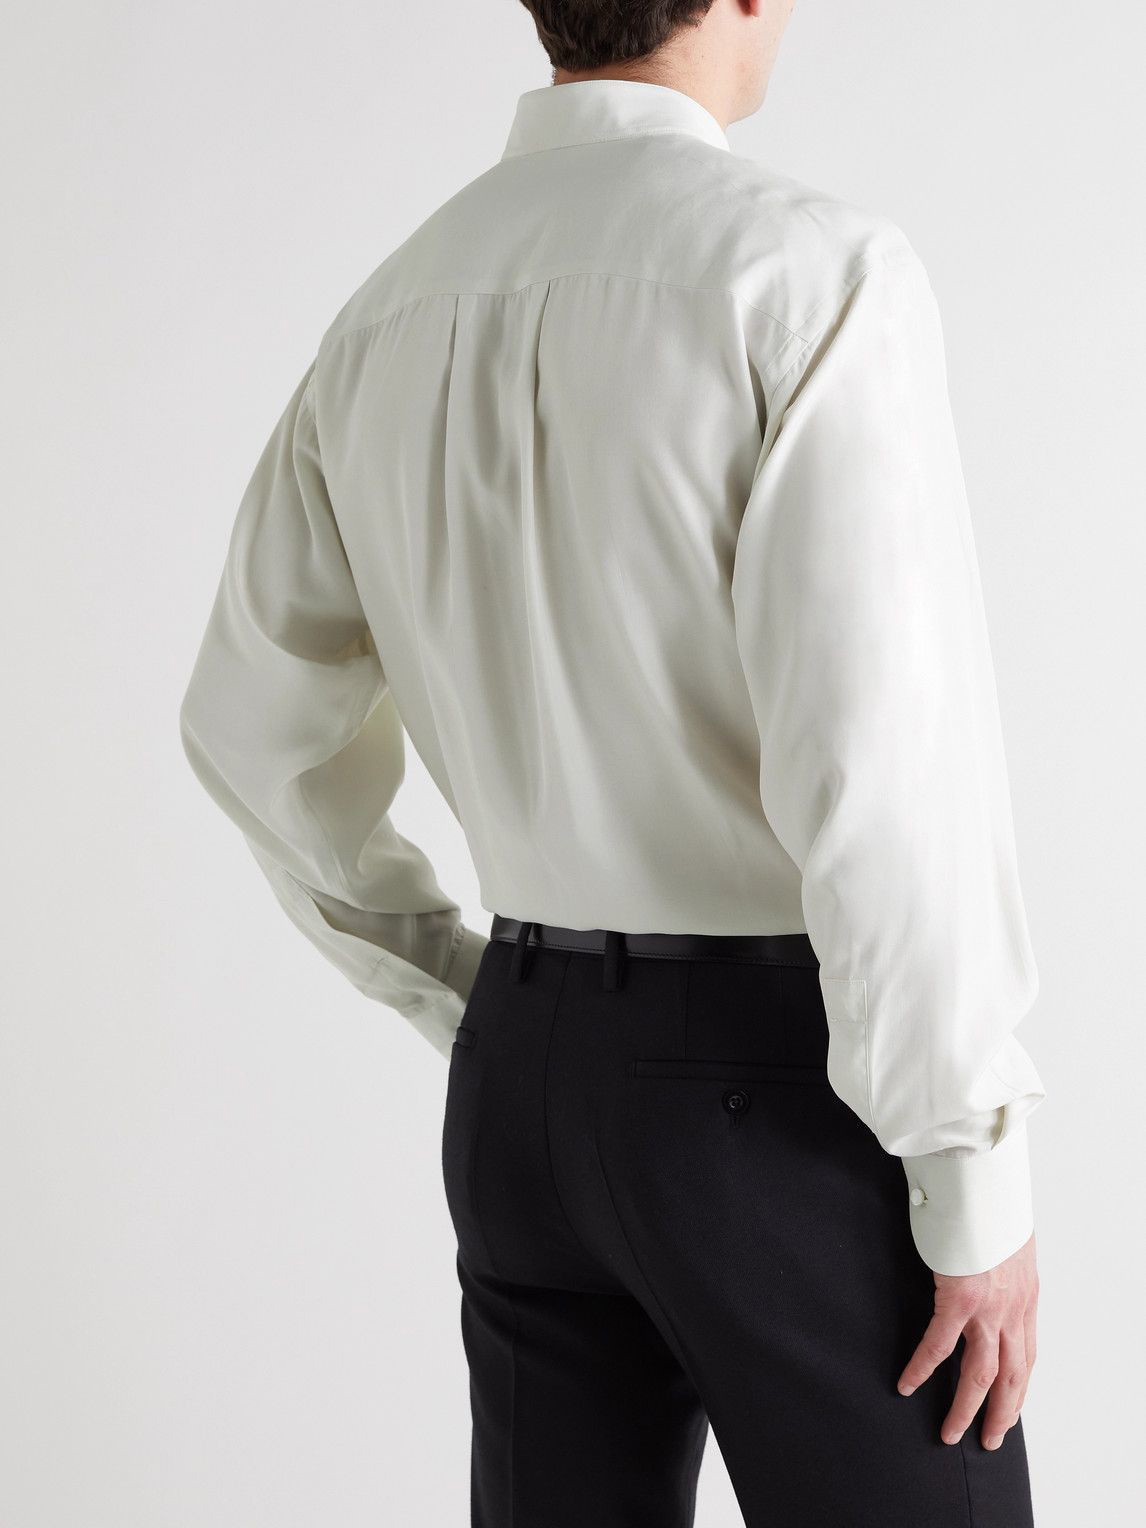 TOM FORD pleat-detail silk shirt - Neutrals